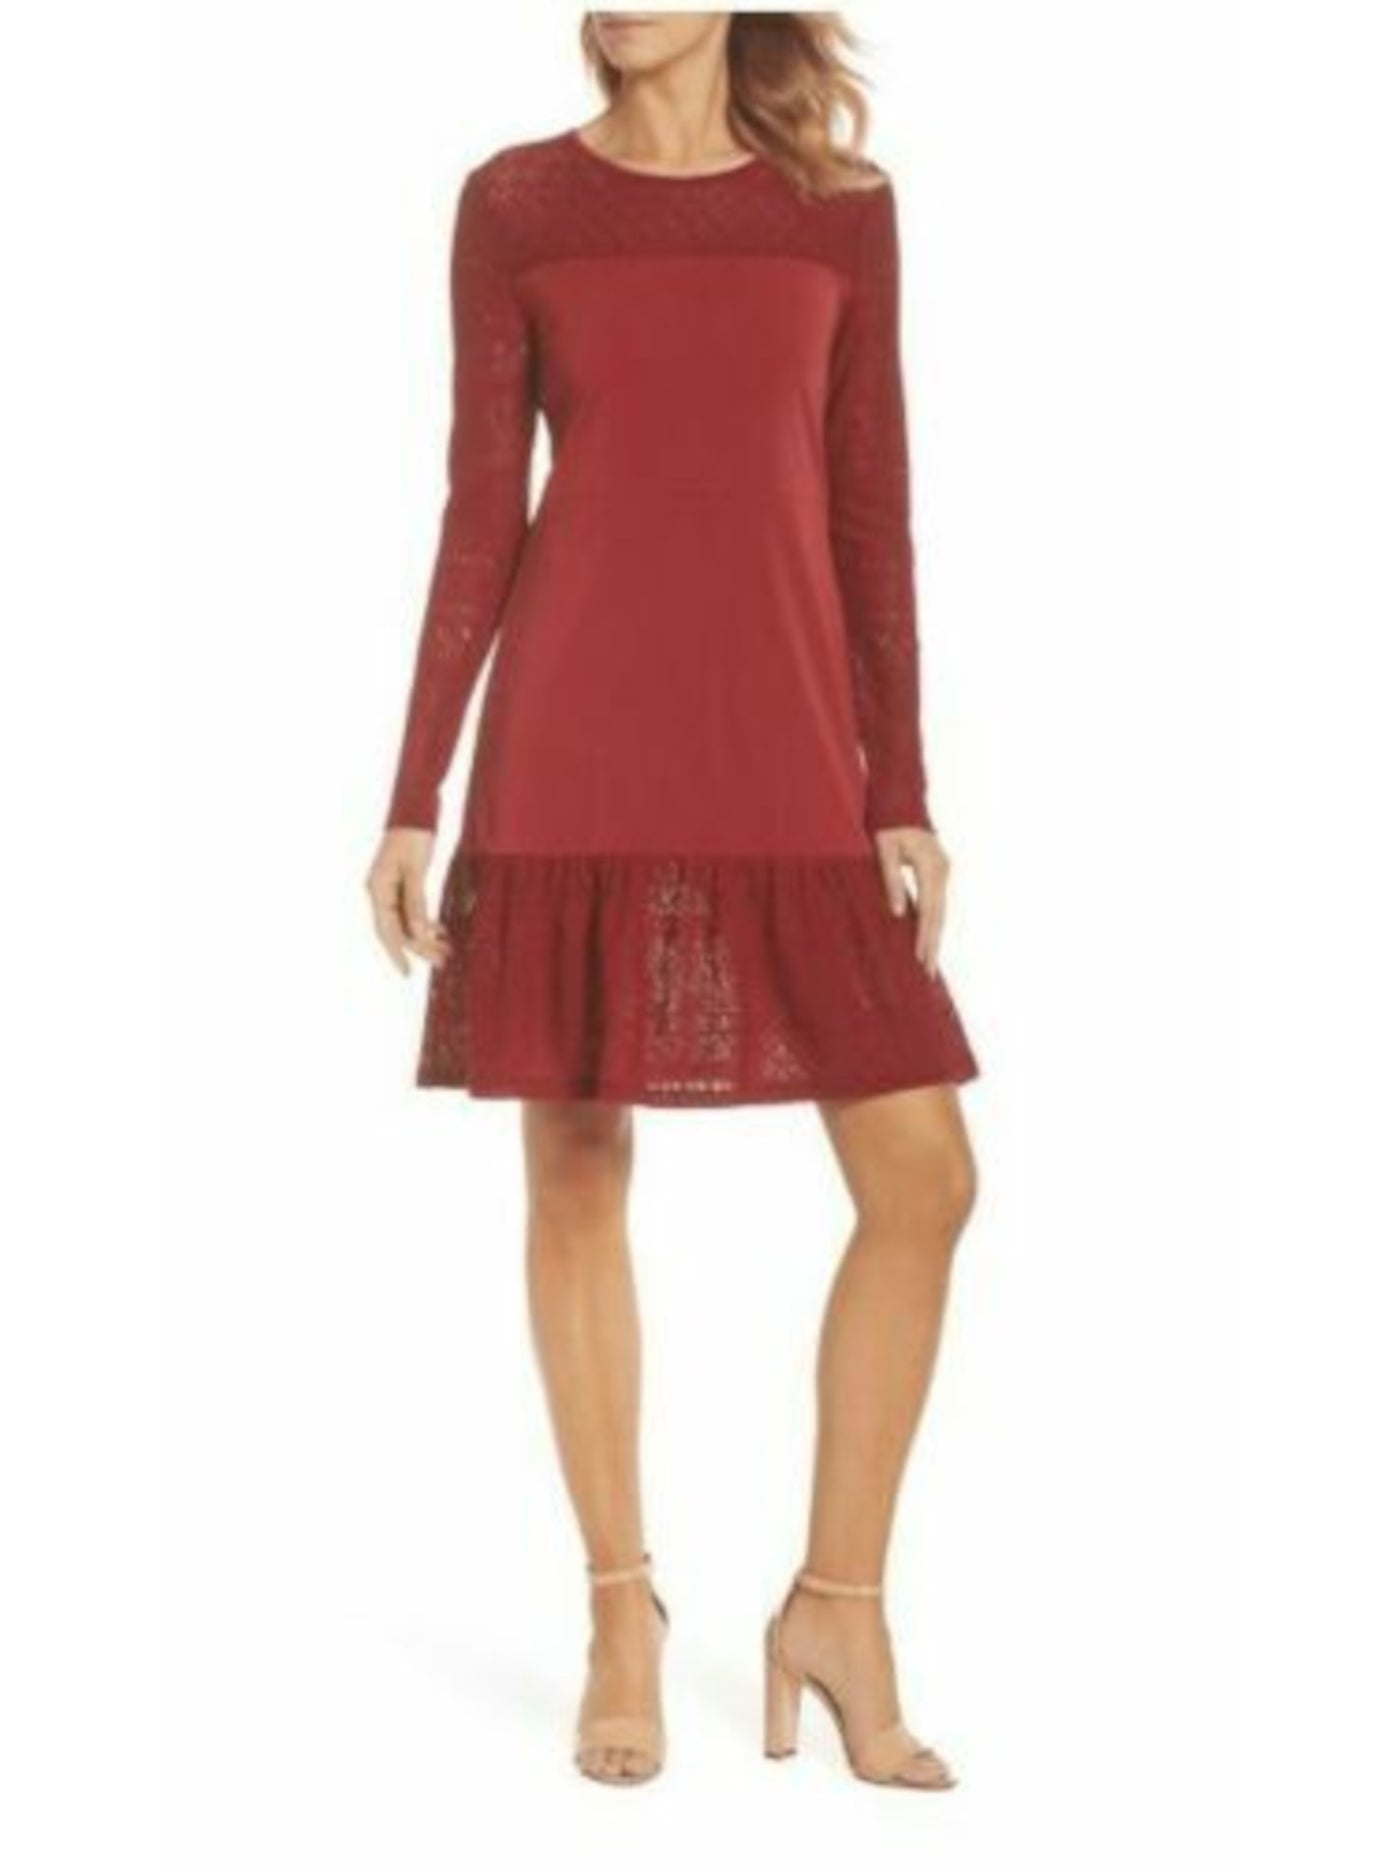 MICHAEL KORS Womens Maroon Lace Flounce Hem Long Sleeve Above The Knee Fit + Flare Dress Petites P